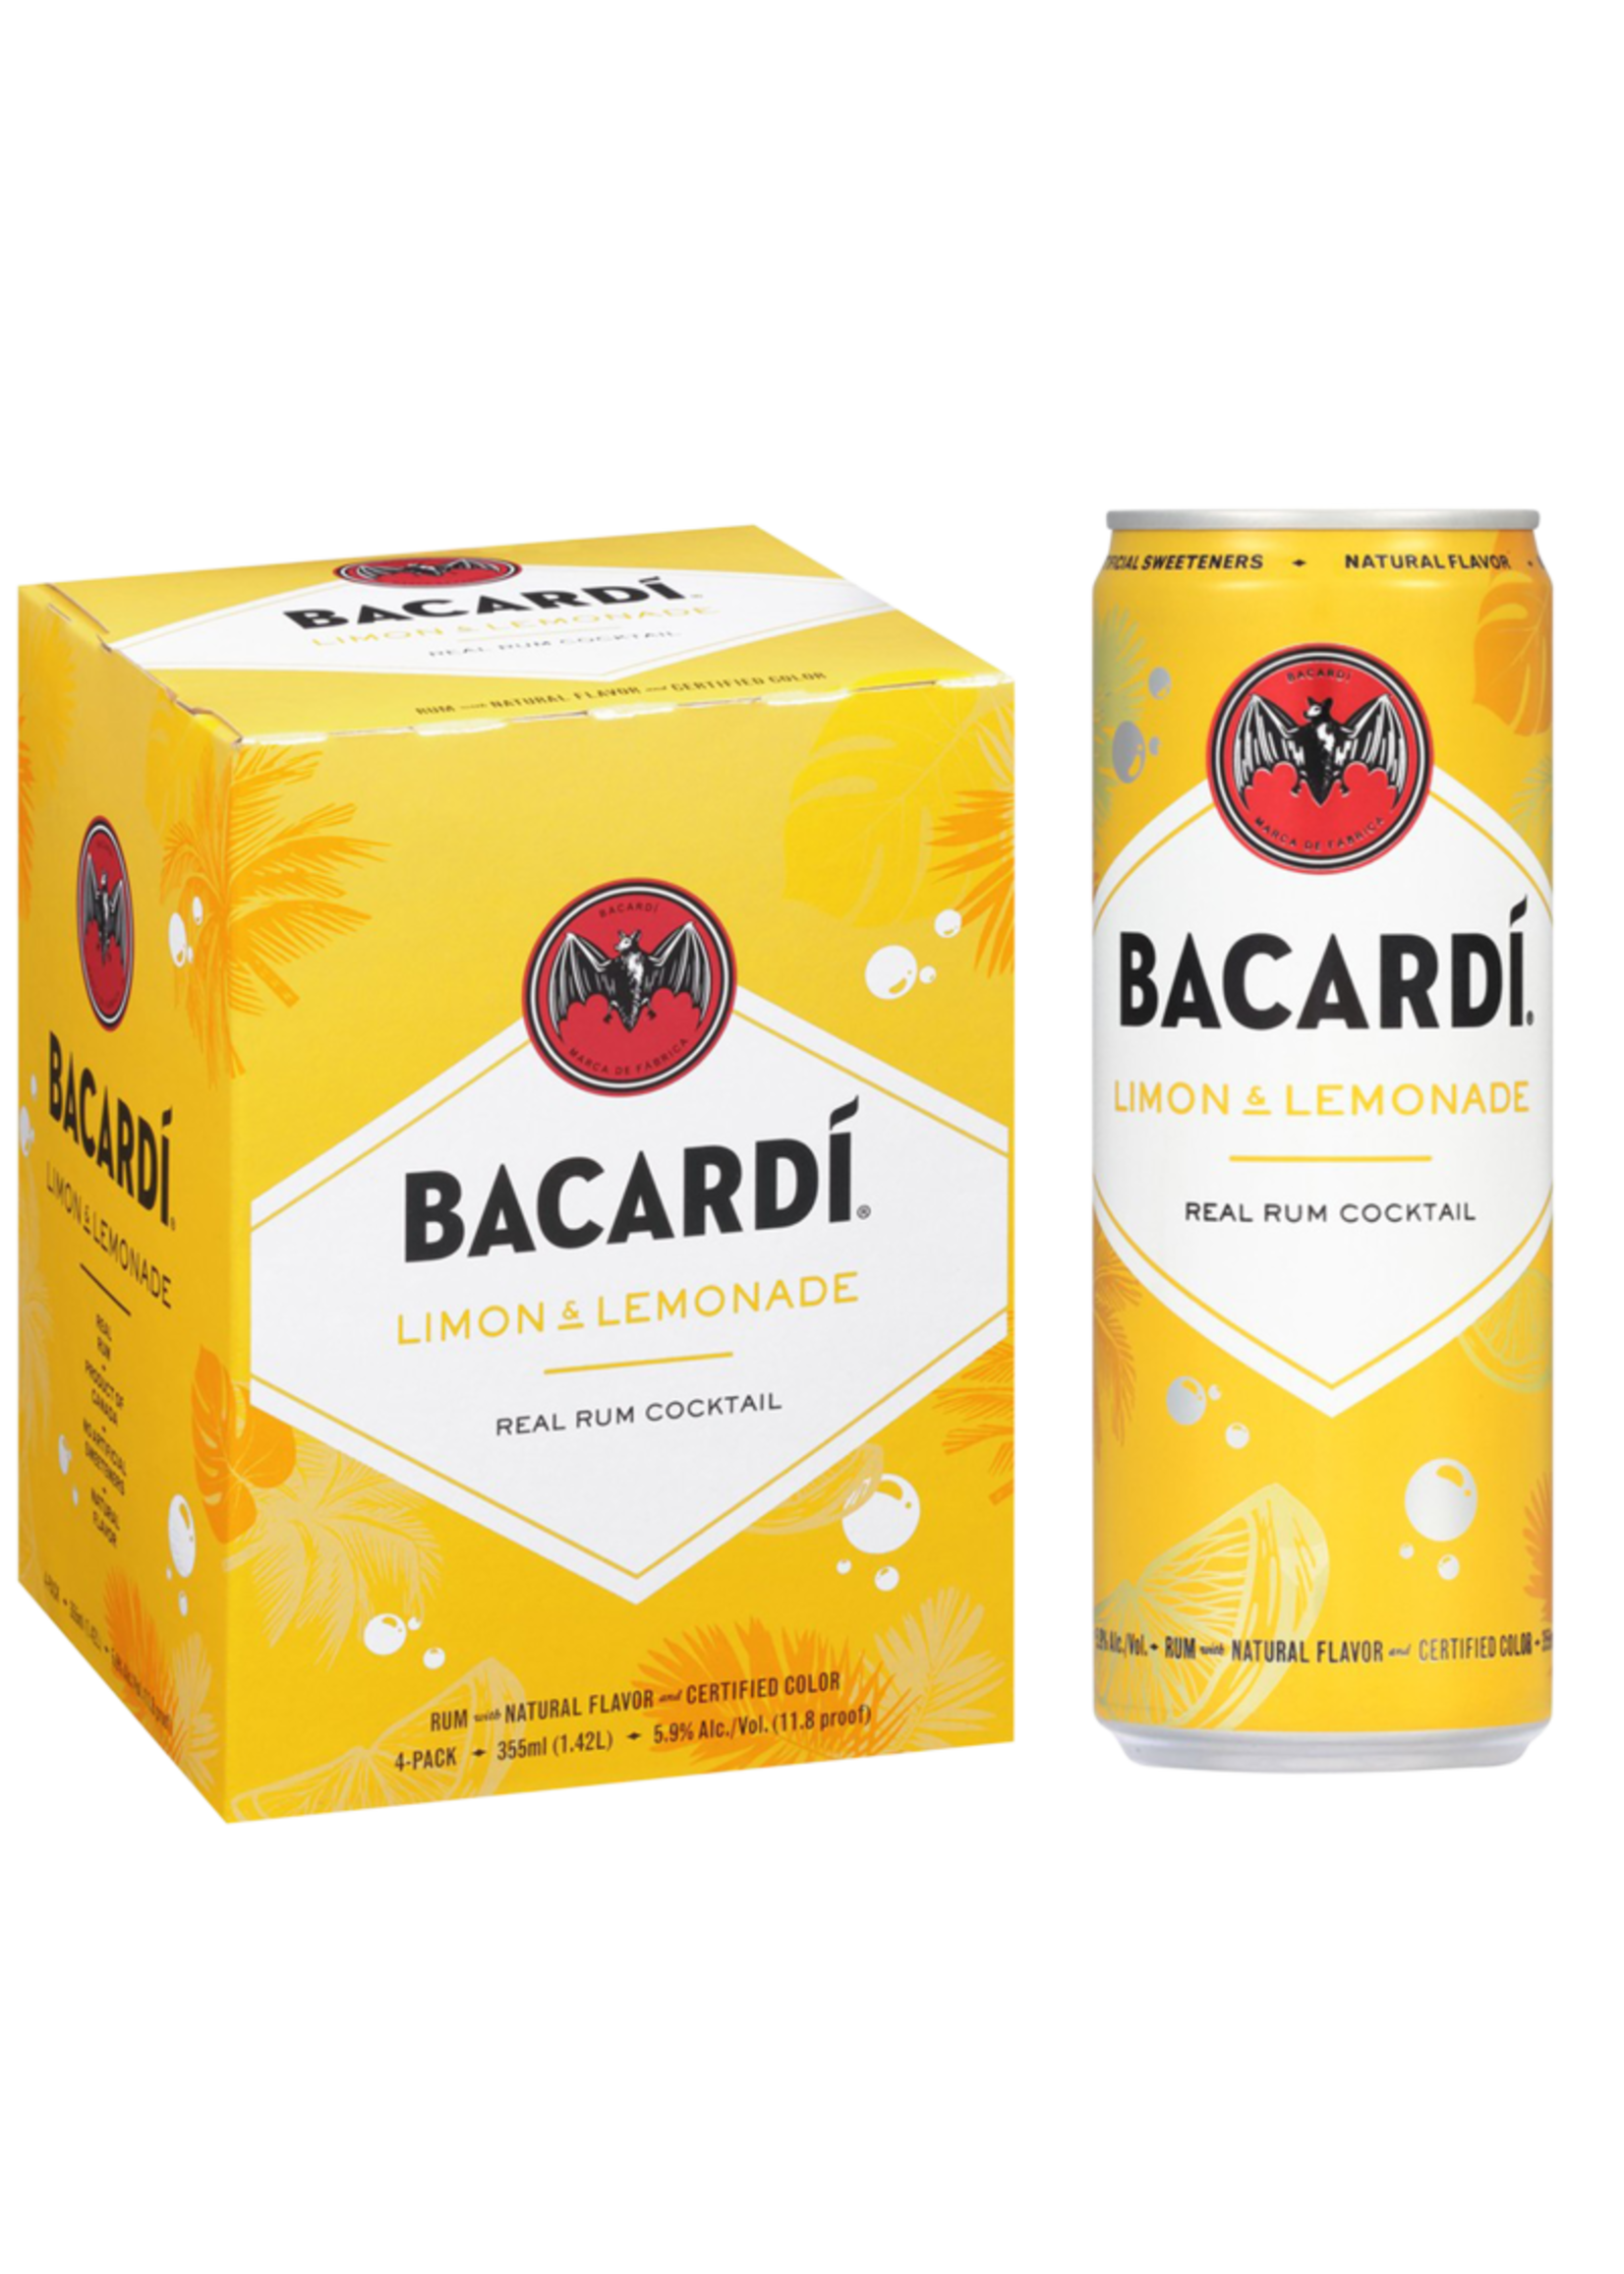 Bacardi Bacardi Rtd Cocktails Limon & Lemonade 11.8Proof 4pk 12oz cans